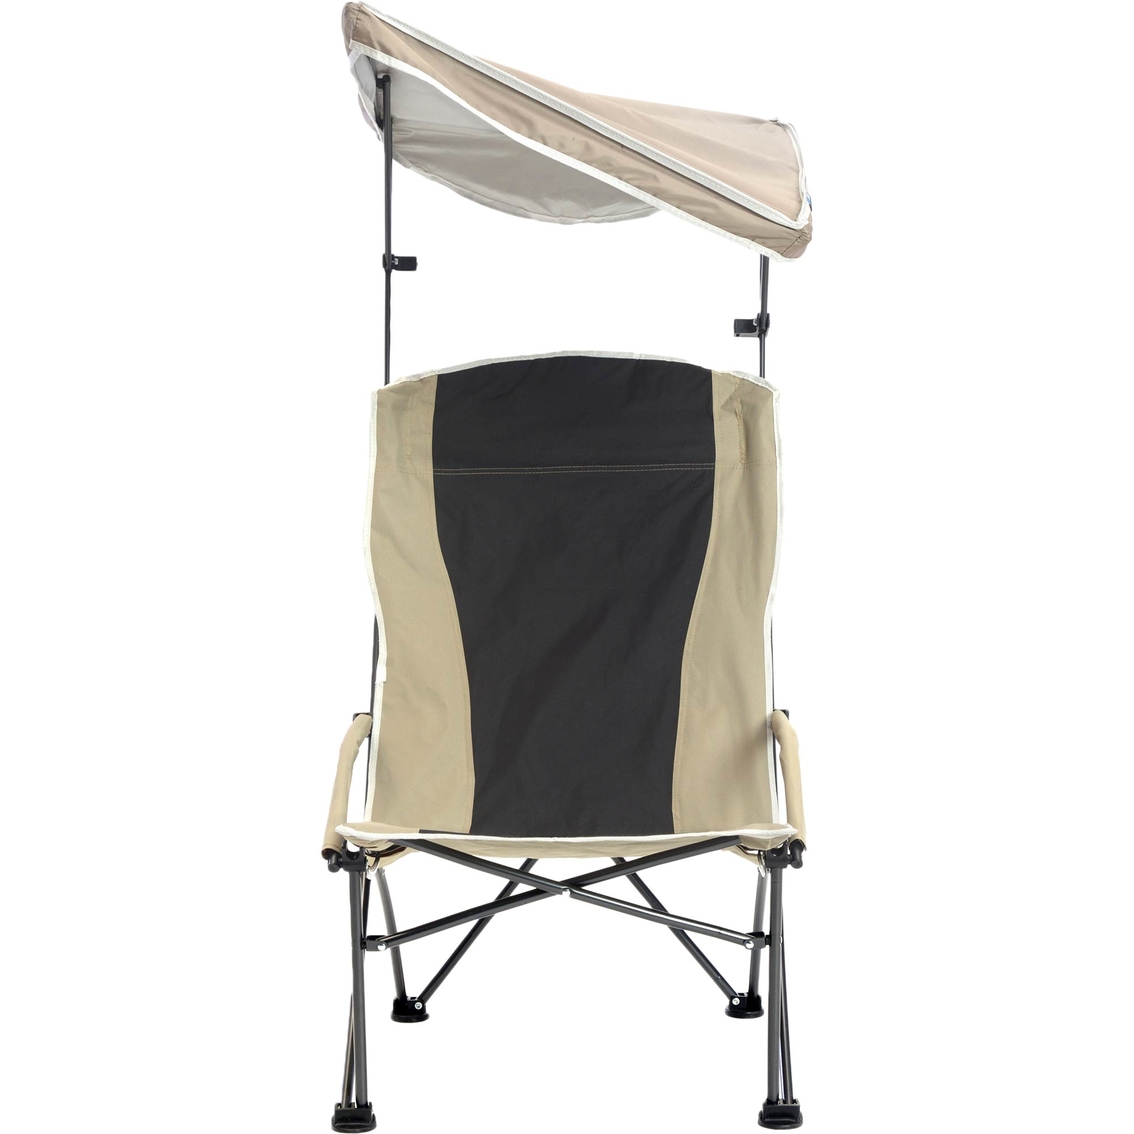 Pro Comfort High Back Shade Folding Chair - Tan/Black - Image 2 of 9